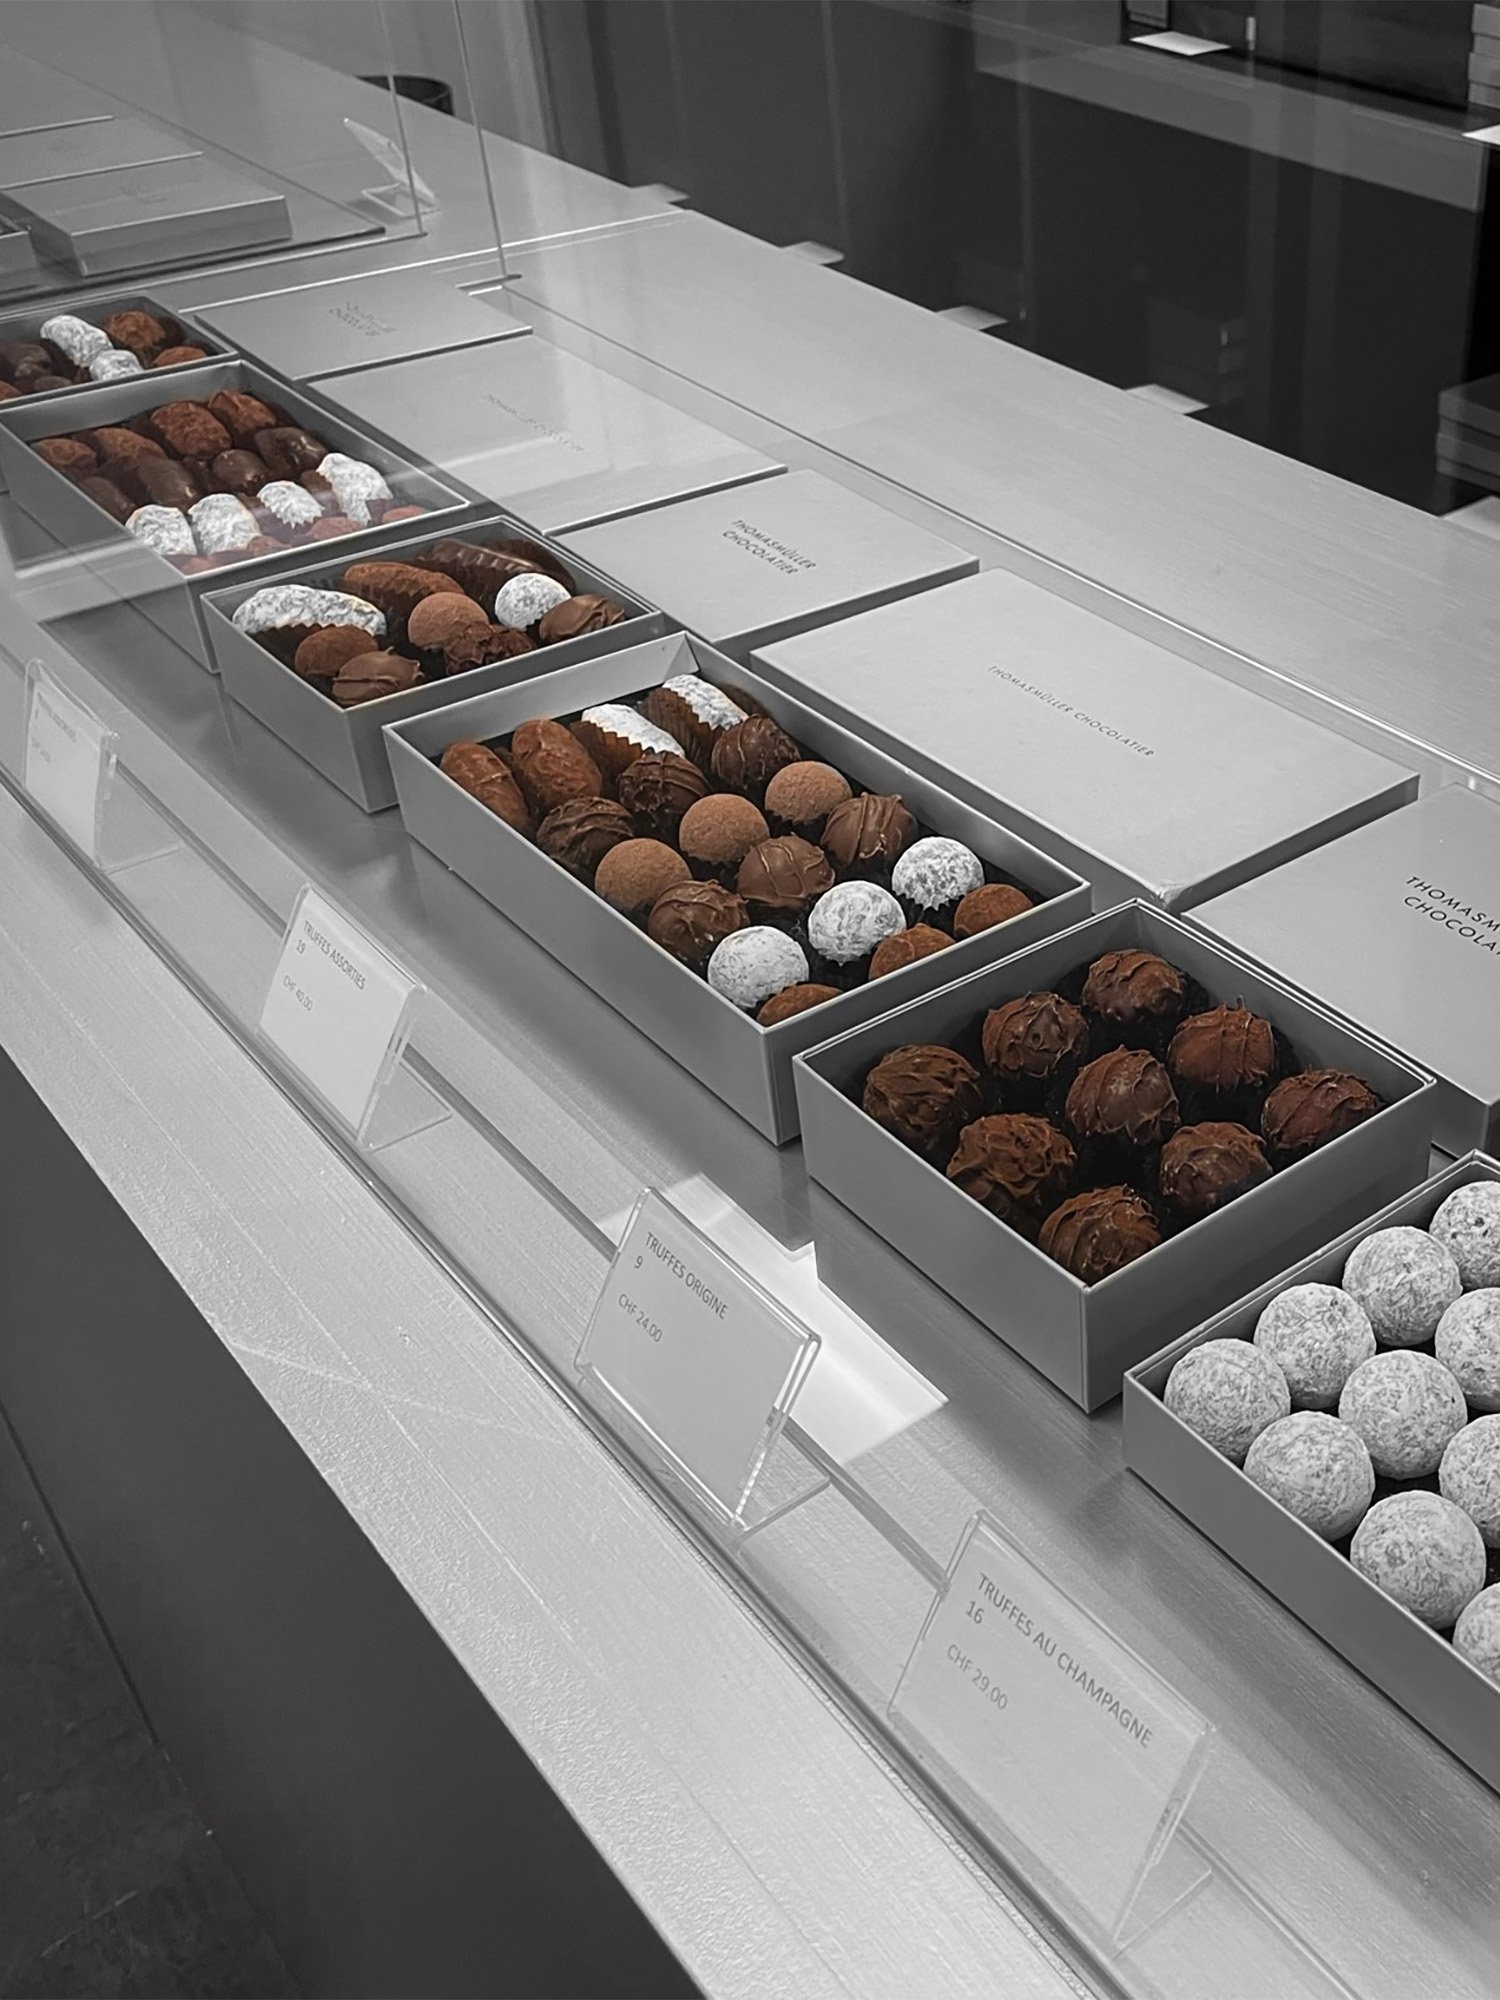 The "Atelier" shop of Chocolatier Thomas Mülelr is open now!